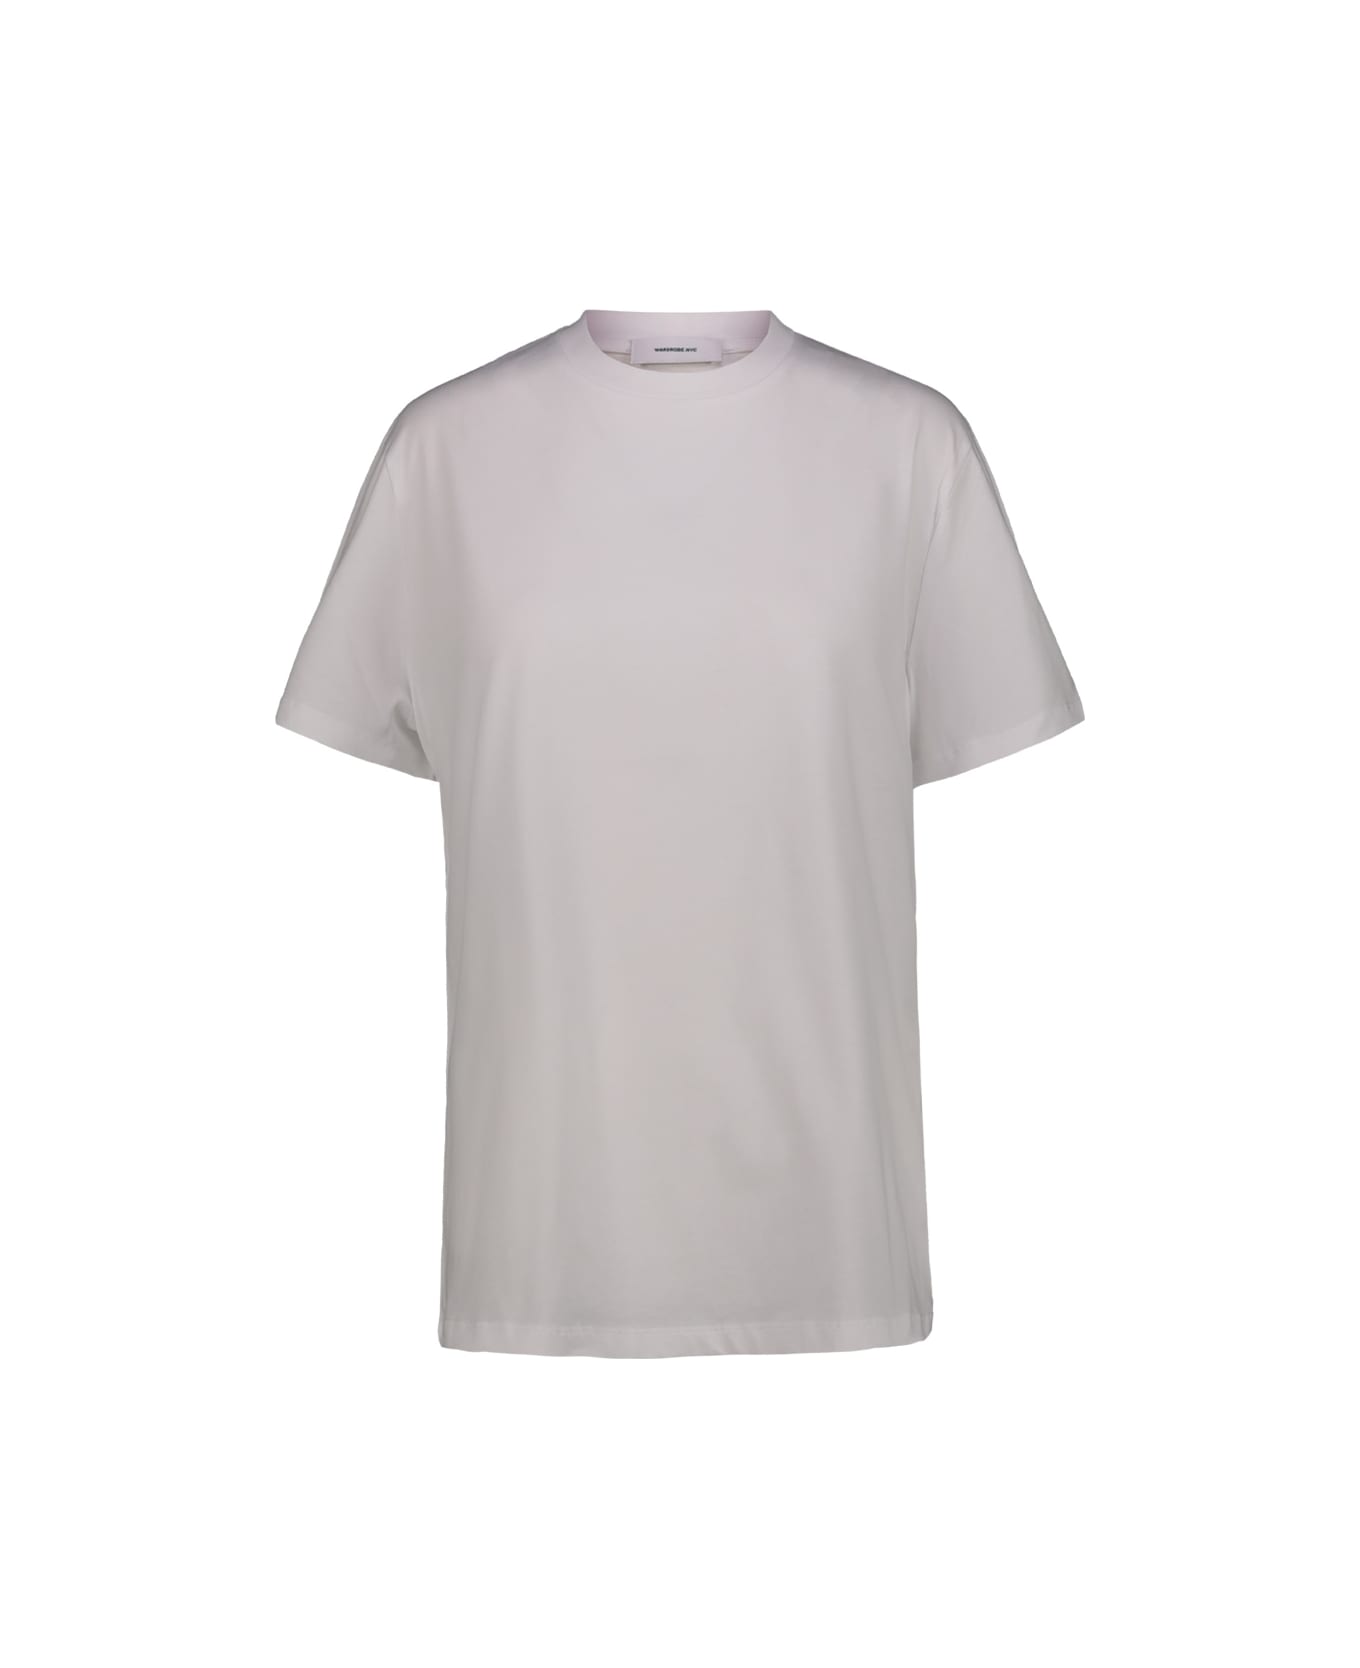 WARDROBE.NYC Classic T-shirt - Wht White Tシャツ